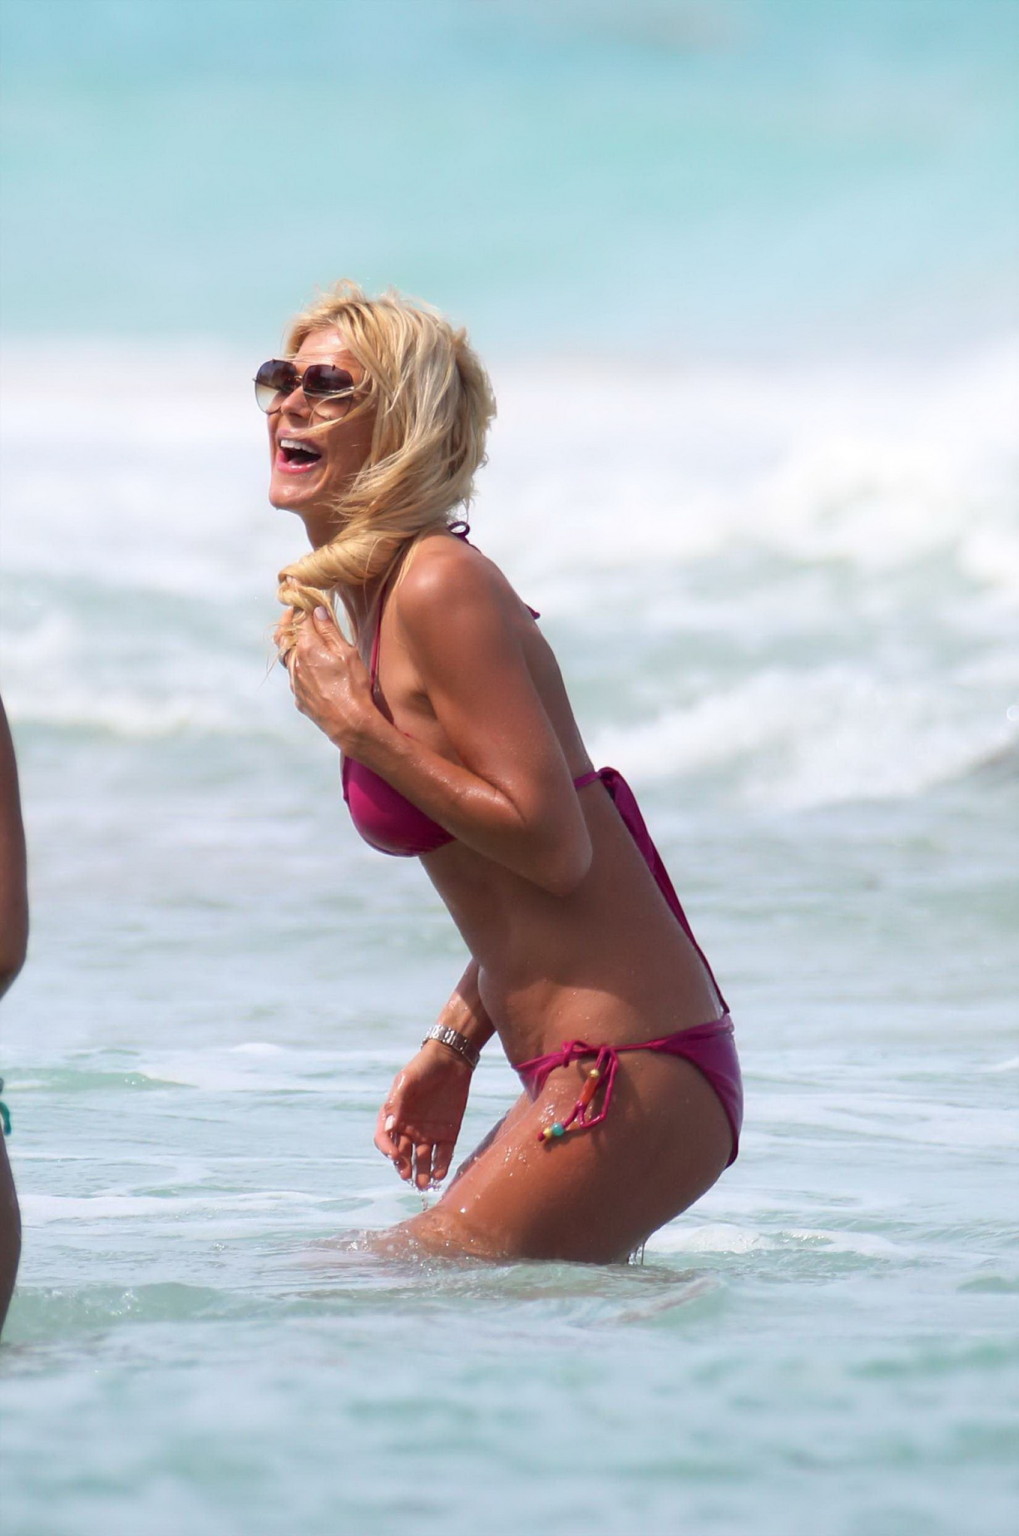 Victoria Silvstedt vollbusig in knappem rosa Bikini am Strand
 #75198722